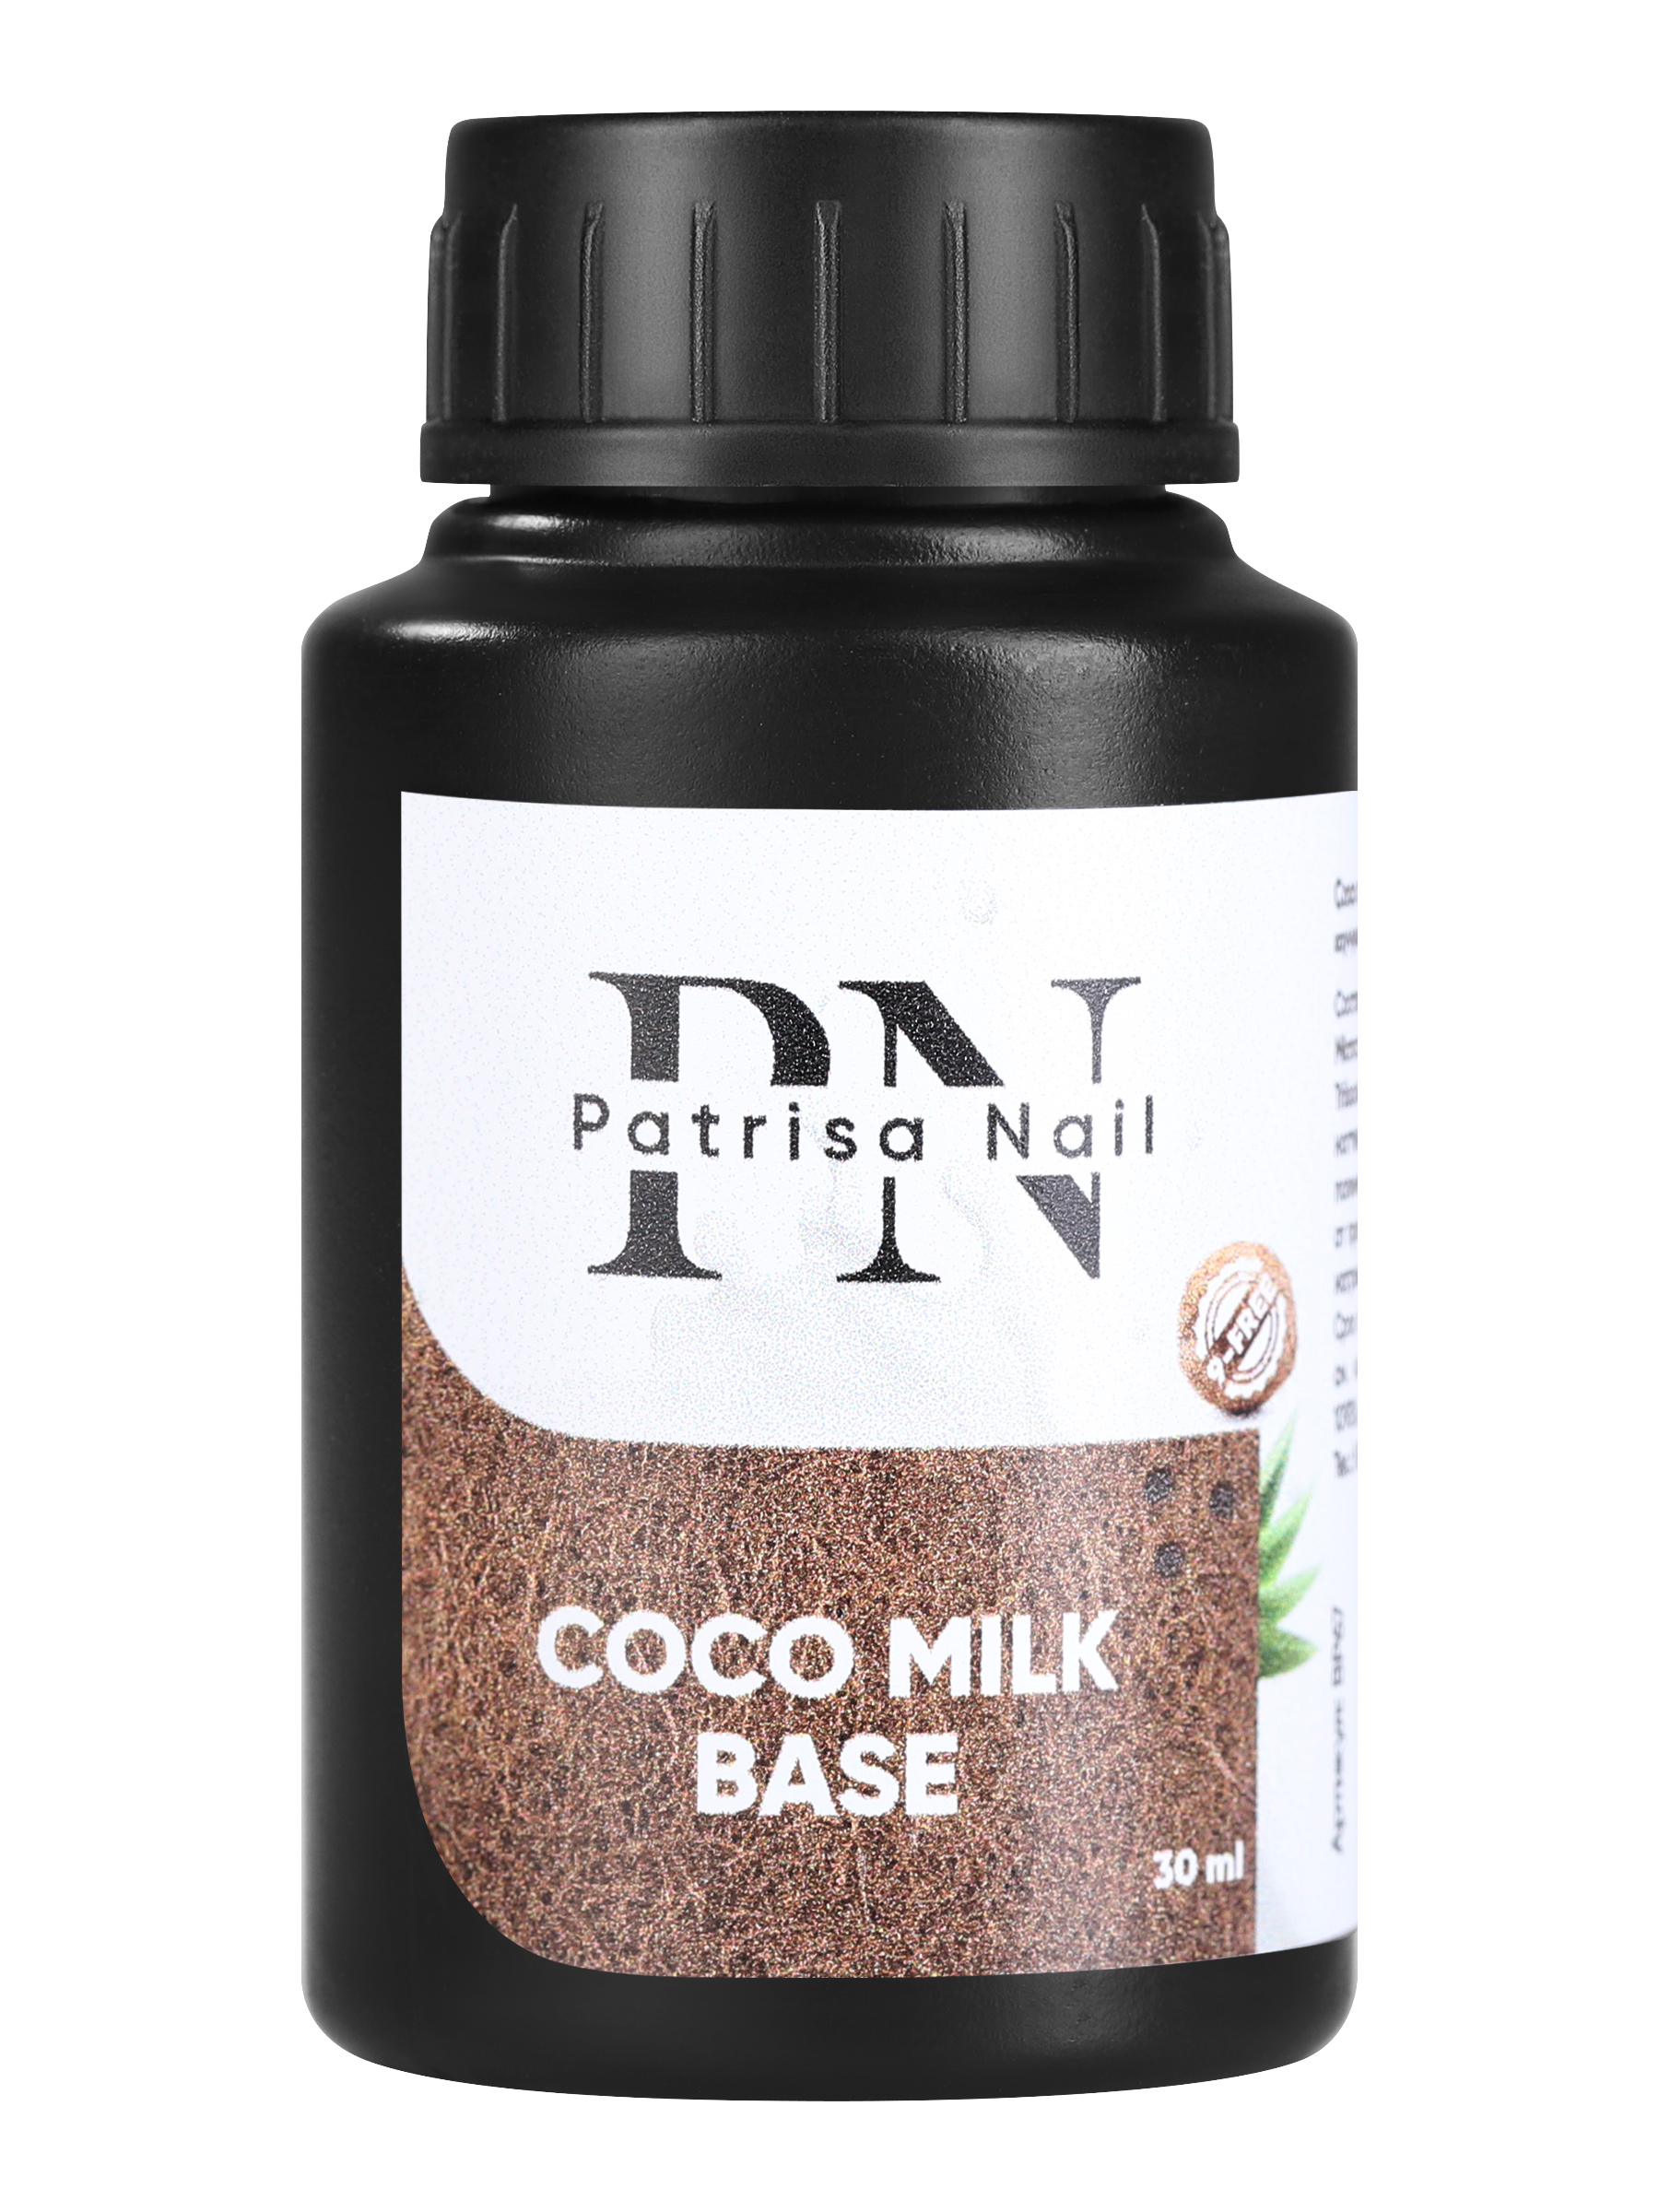 База для гель-лака Patrisa Nail Coco milk base камуфлирующая каучуковая молочная, 30 мл